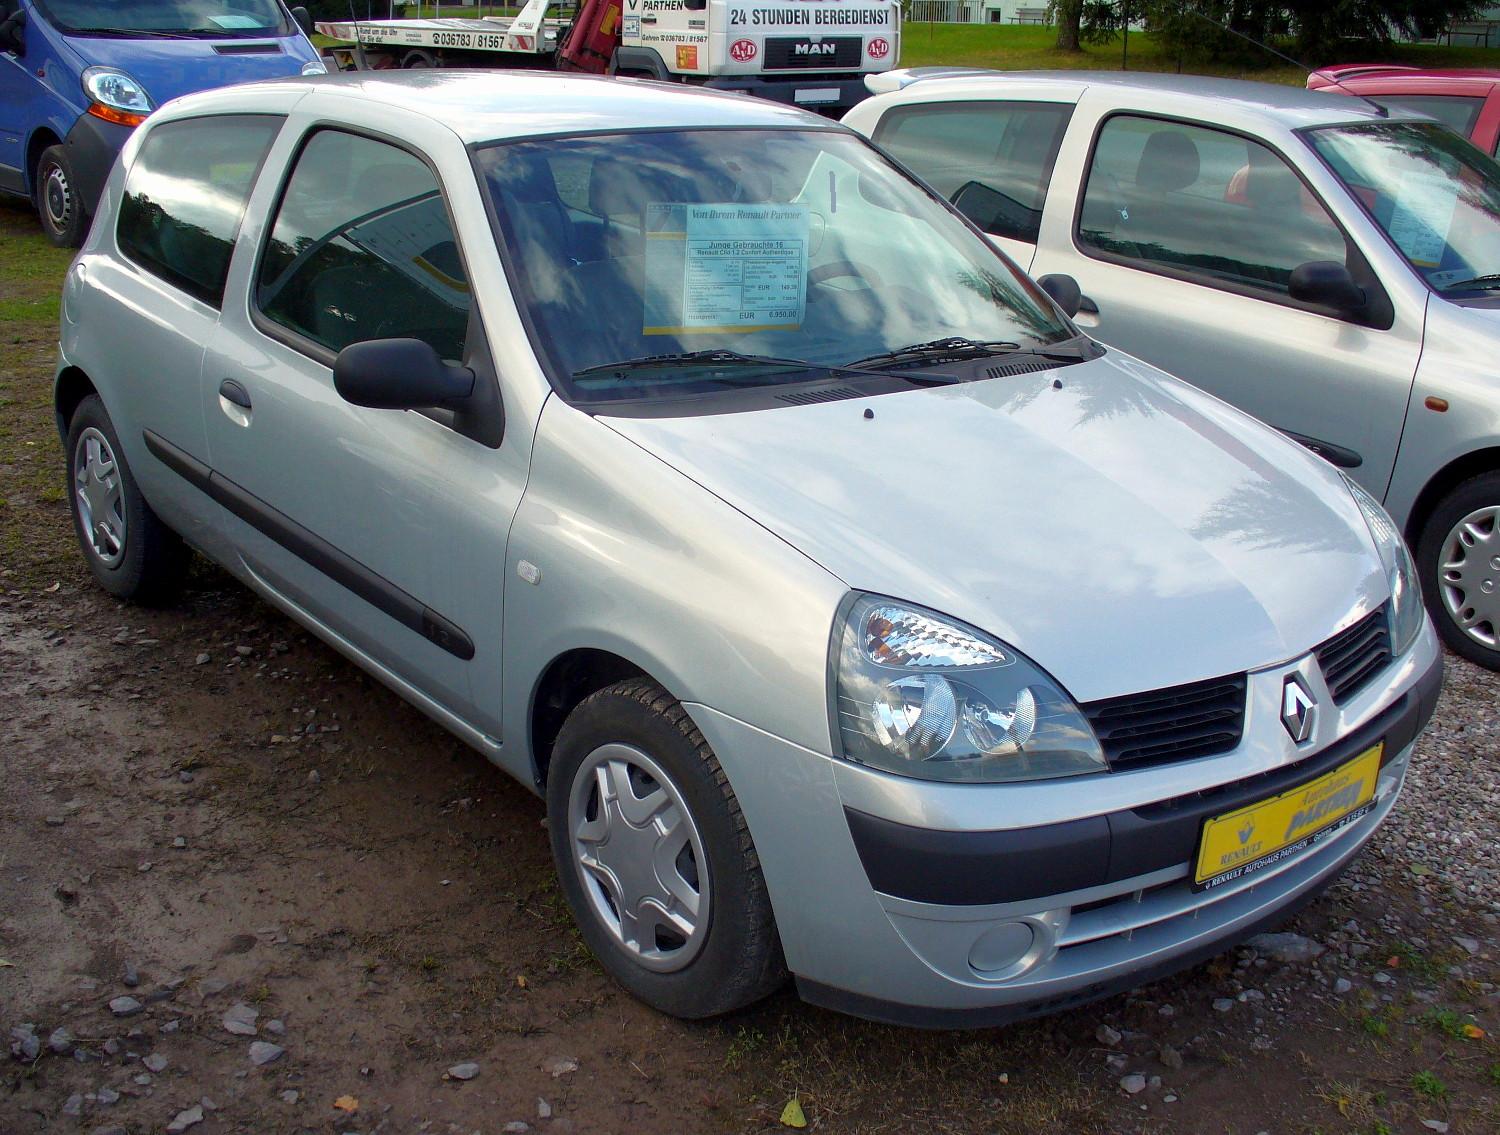 roem overdracht rijk File:Renault Clio II 1.2 Confort Authentique Facelift.JPG - Wikimedia  Commons